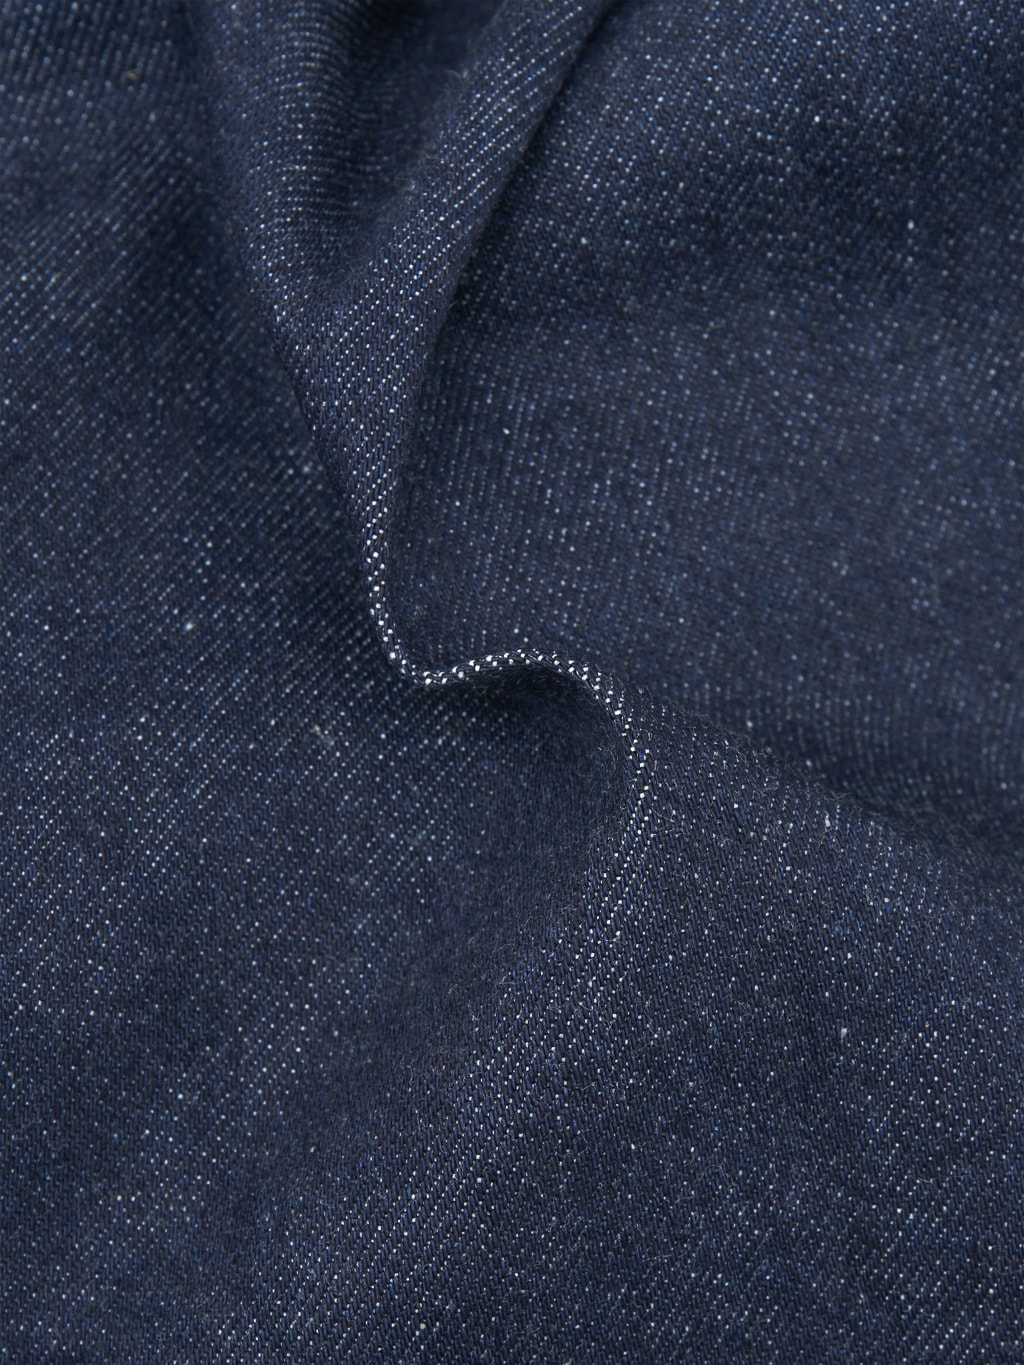 Japan Blue J205 Stretch Circle Tapered denim Jeans texture